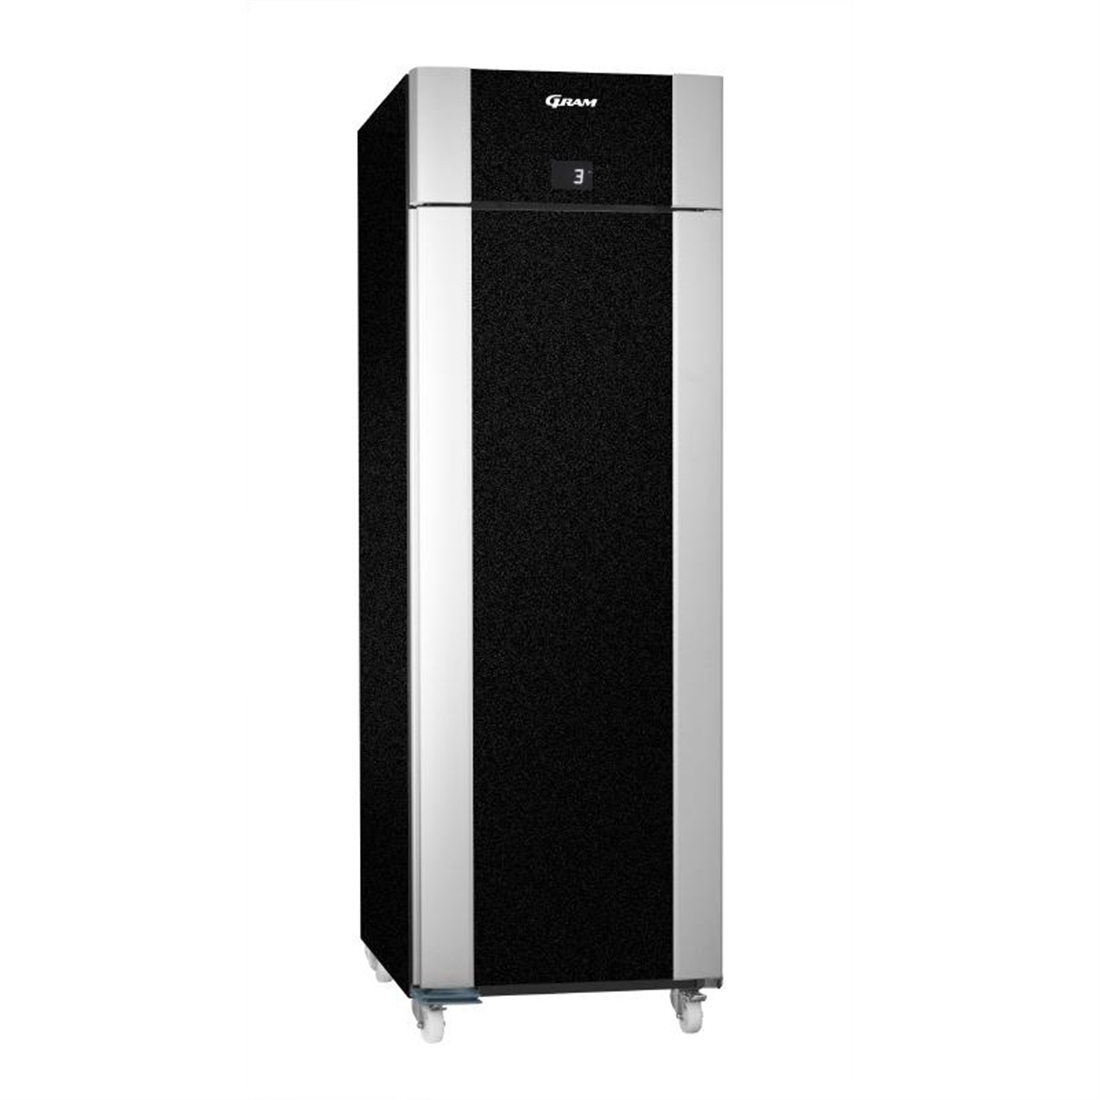 Gram Eco Plus 1 Door 610Ltr Freezer Black F 70 BCG C1 4N